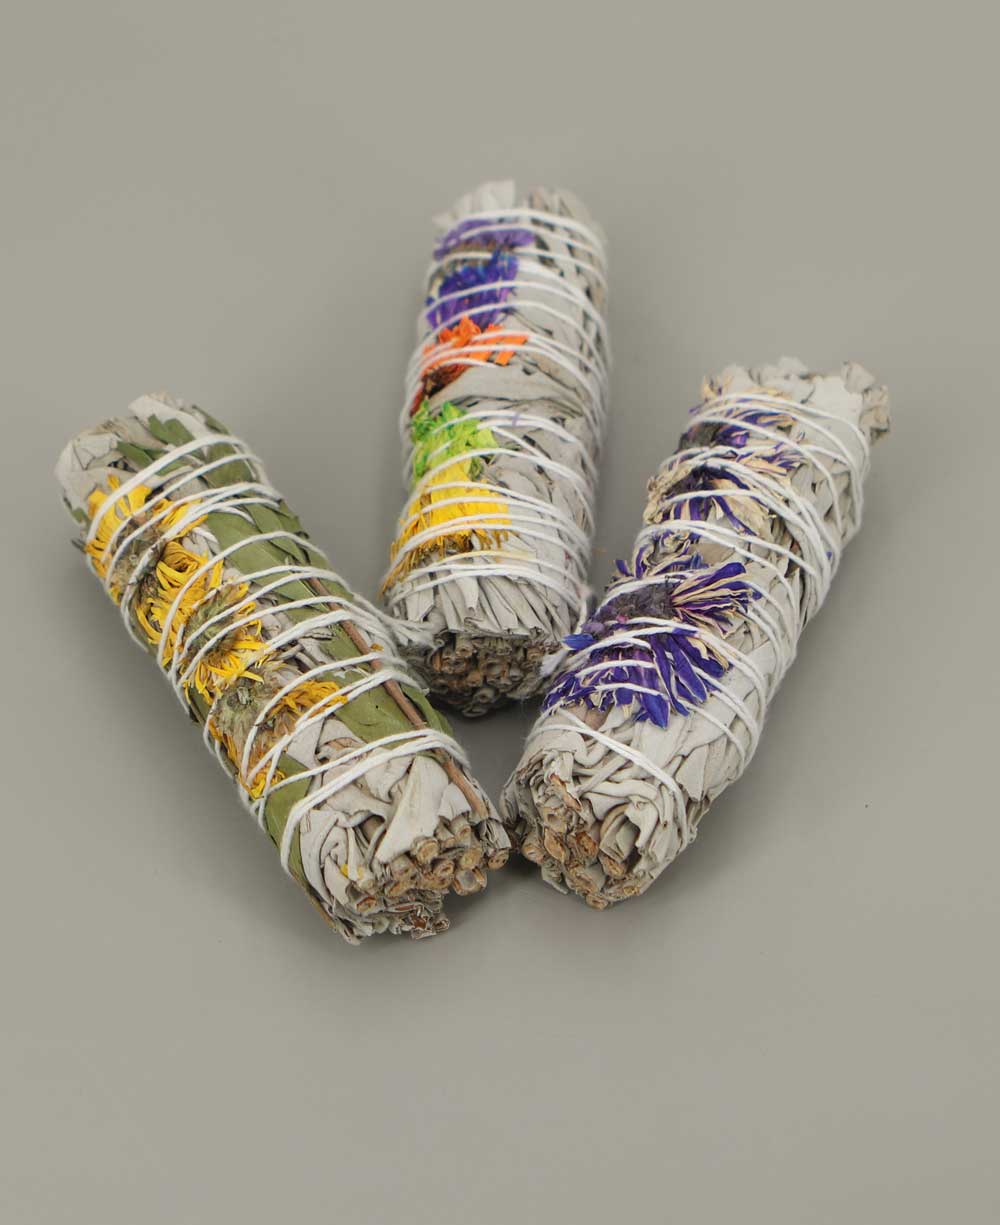 Set of Three Floral Sage Bundles and Palo Santo Sticks - Meditation